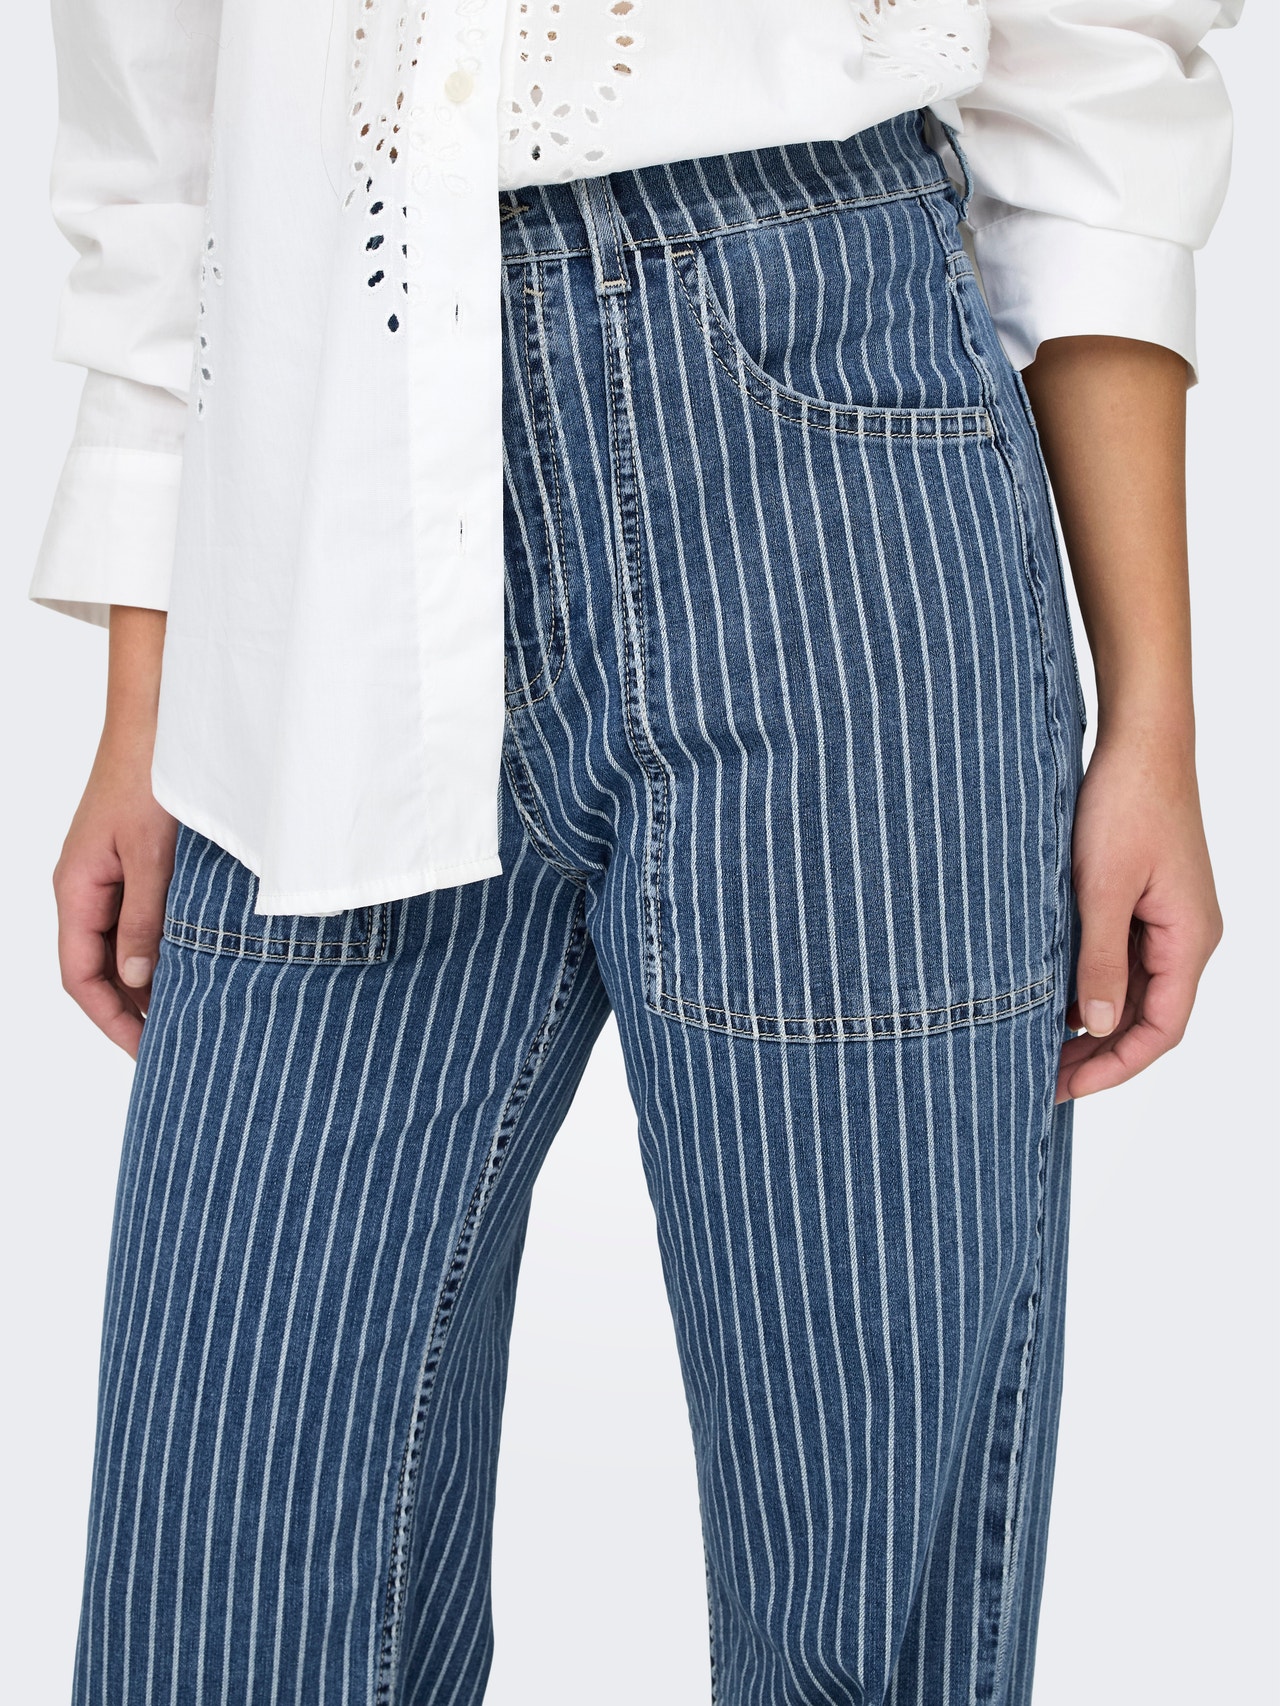 ONLY Weiter Beinschnitt Hohe Taille Jeans -Light Blue Denim - 15298573